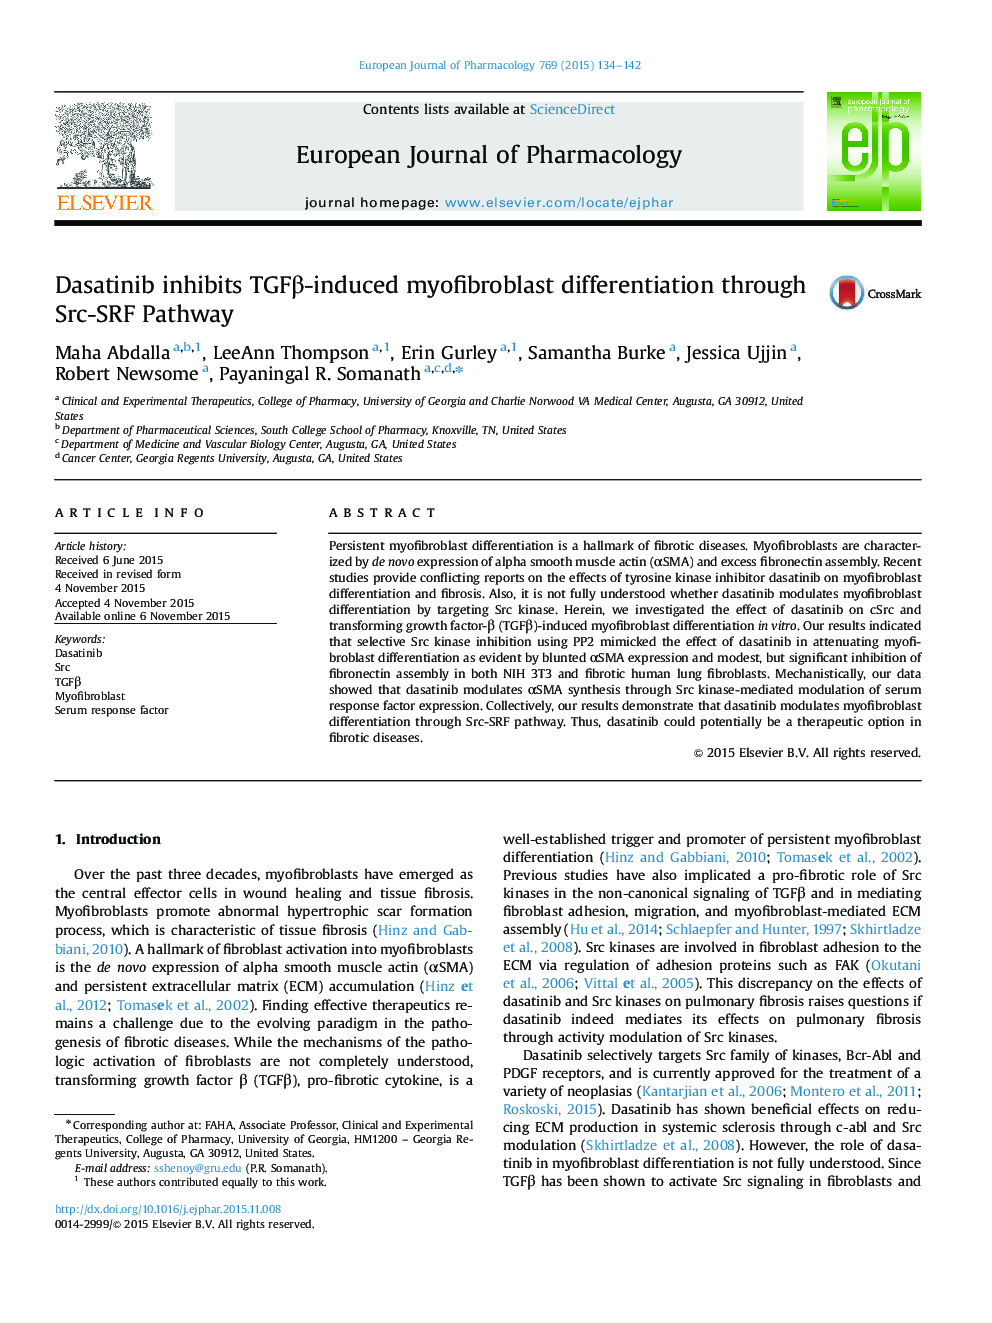 Dasatinib inhibits TGFβ-induced myofibroblast differentiation through Src-SRF Pathway